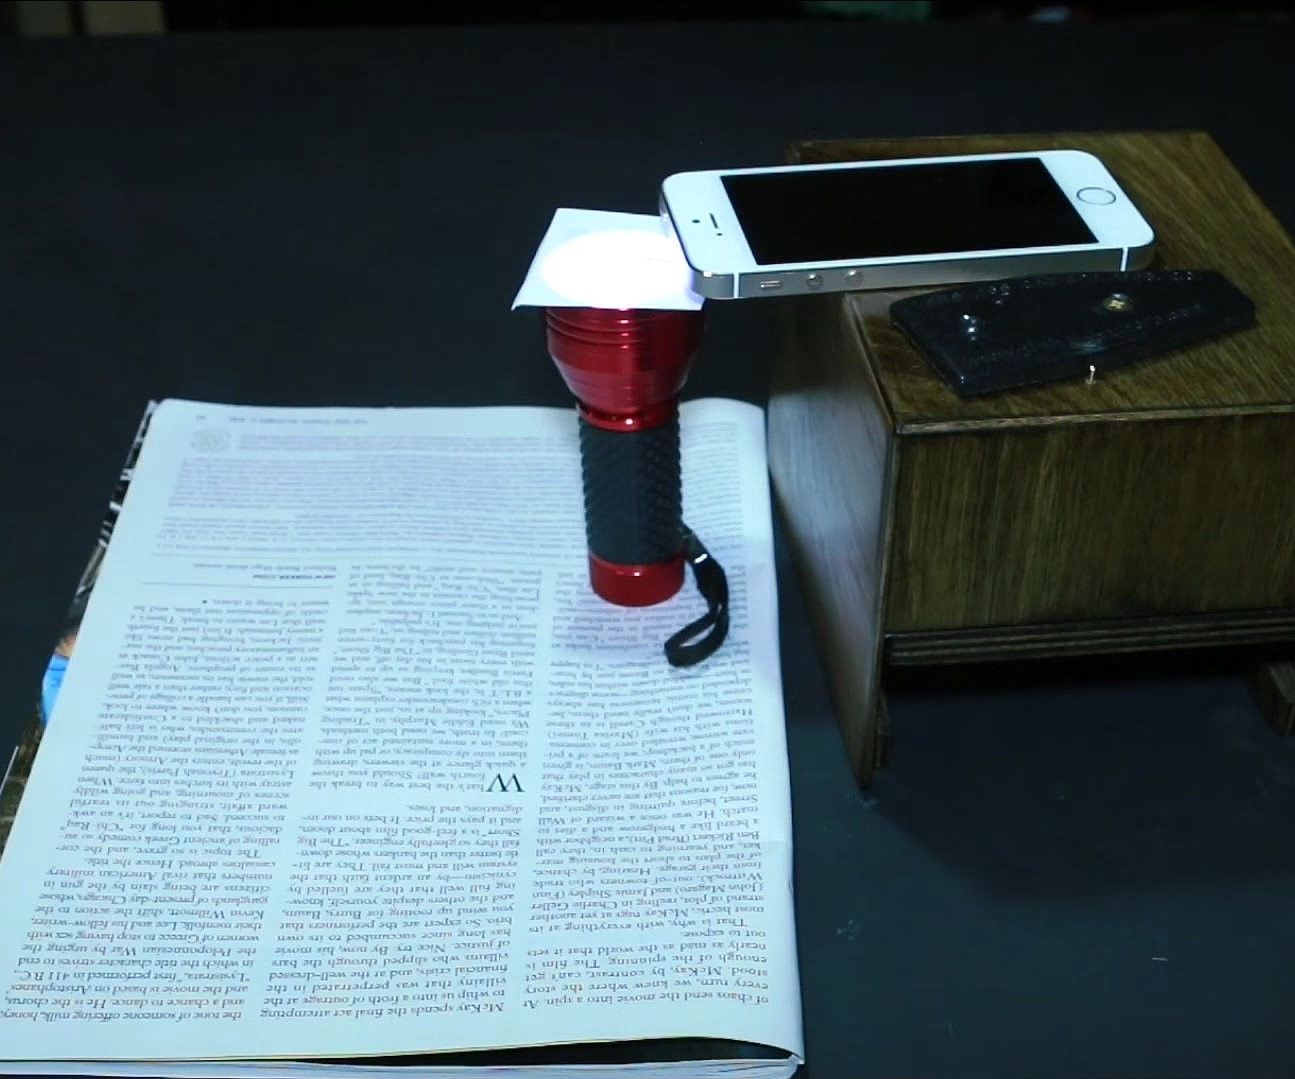 DIY Microscope Using Smartphone